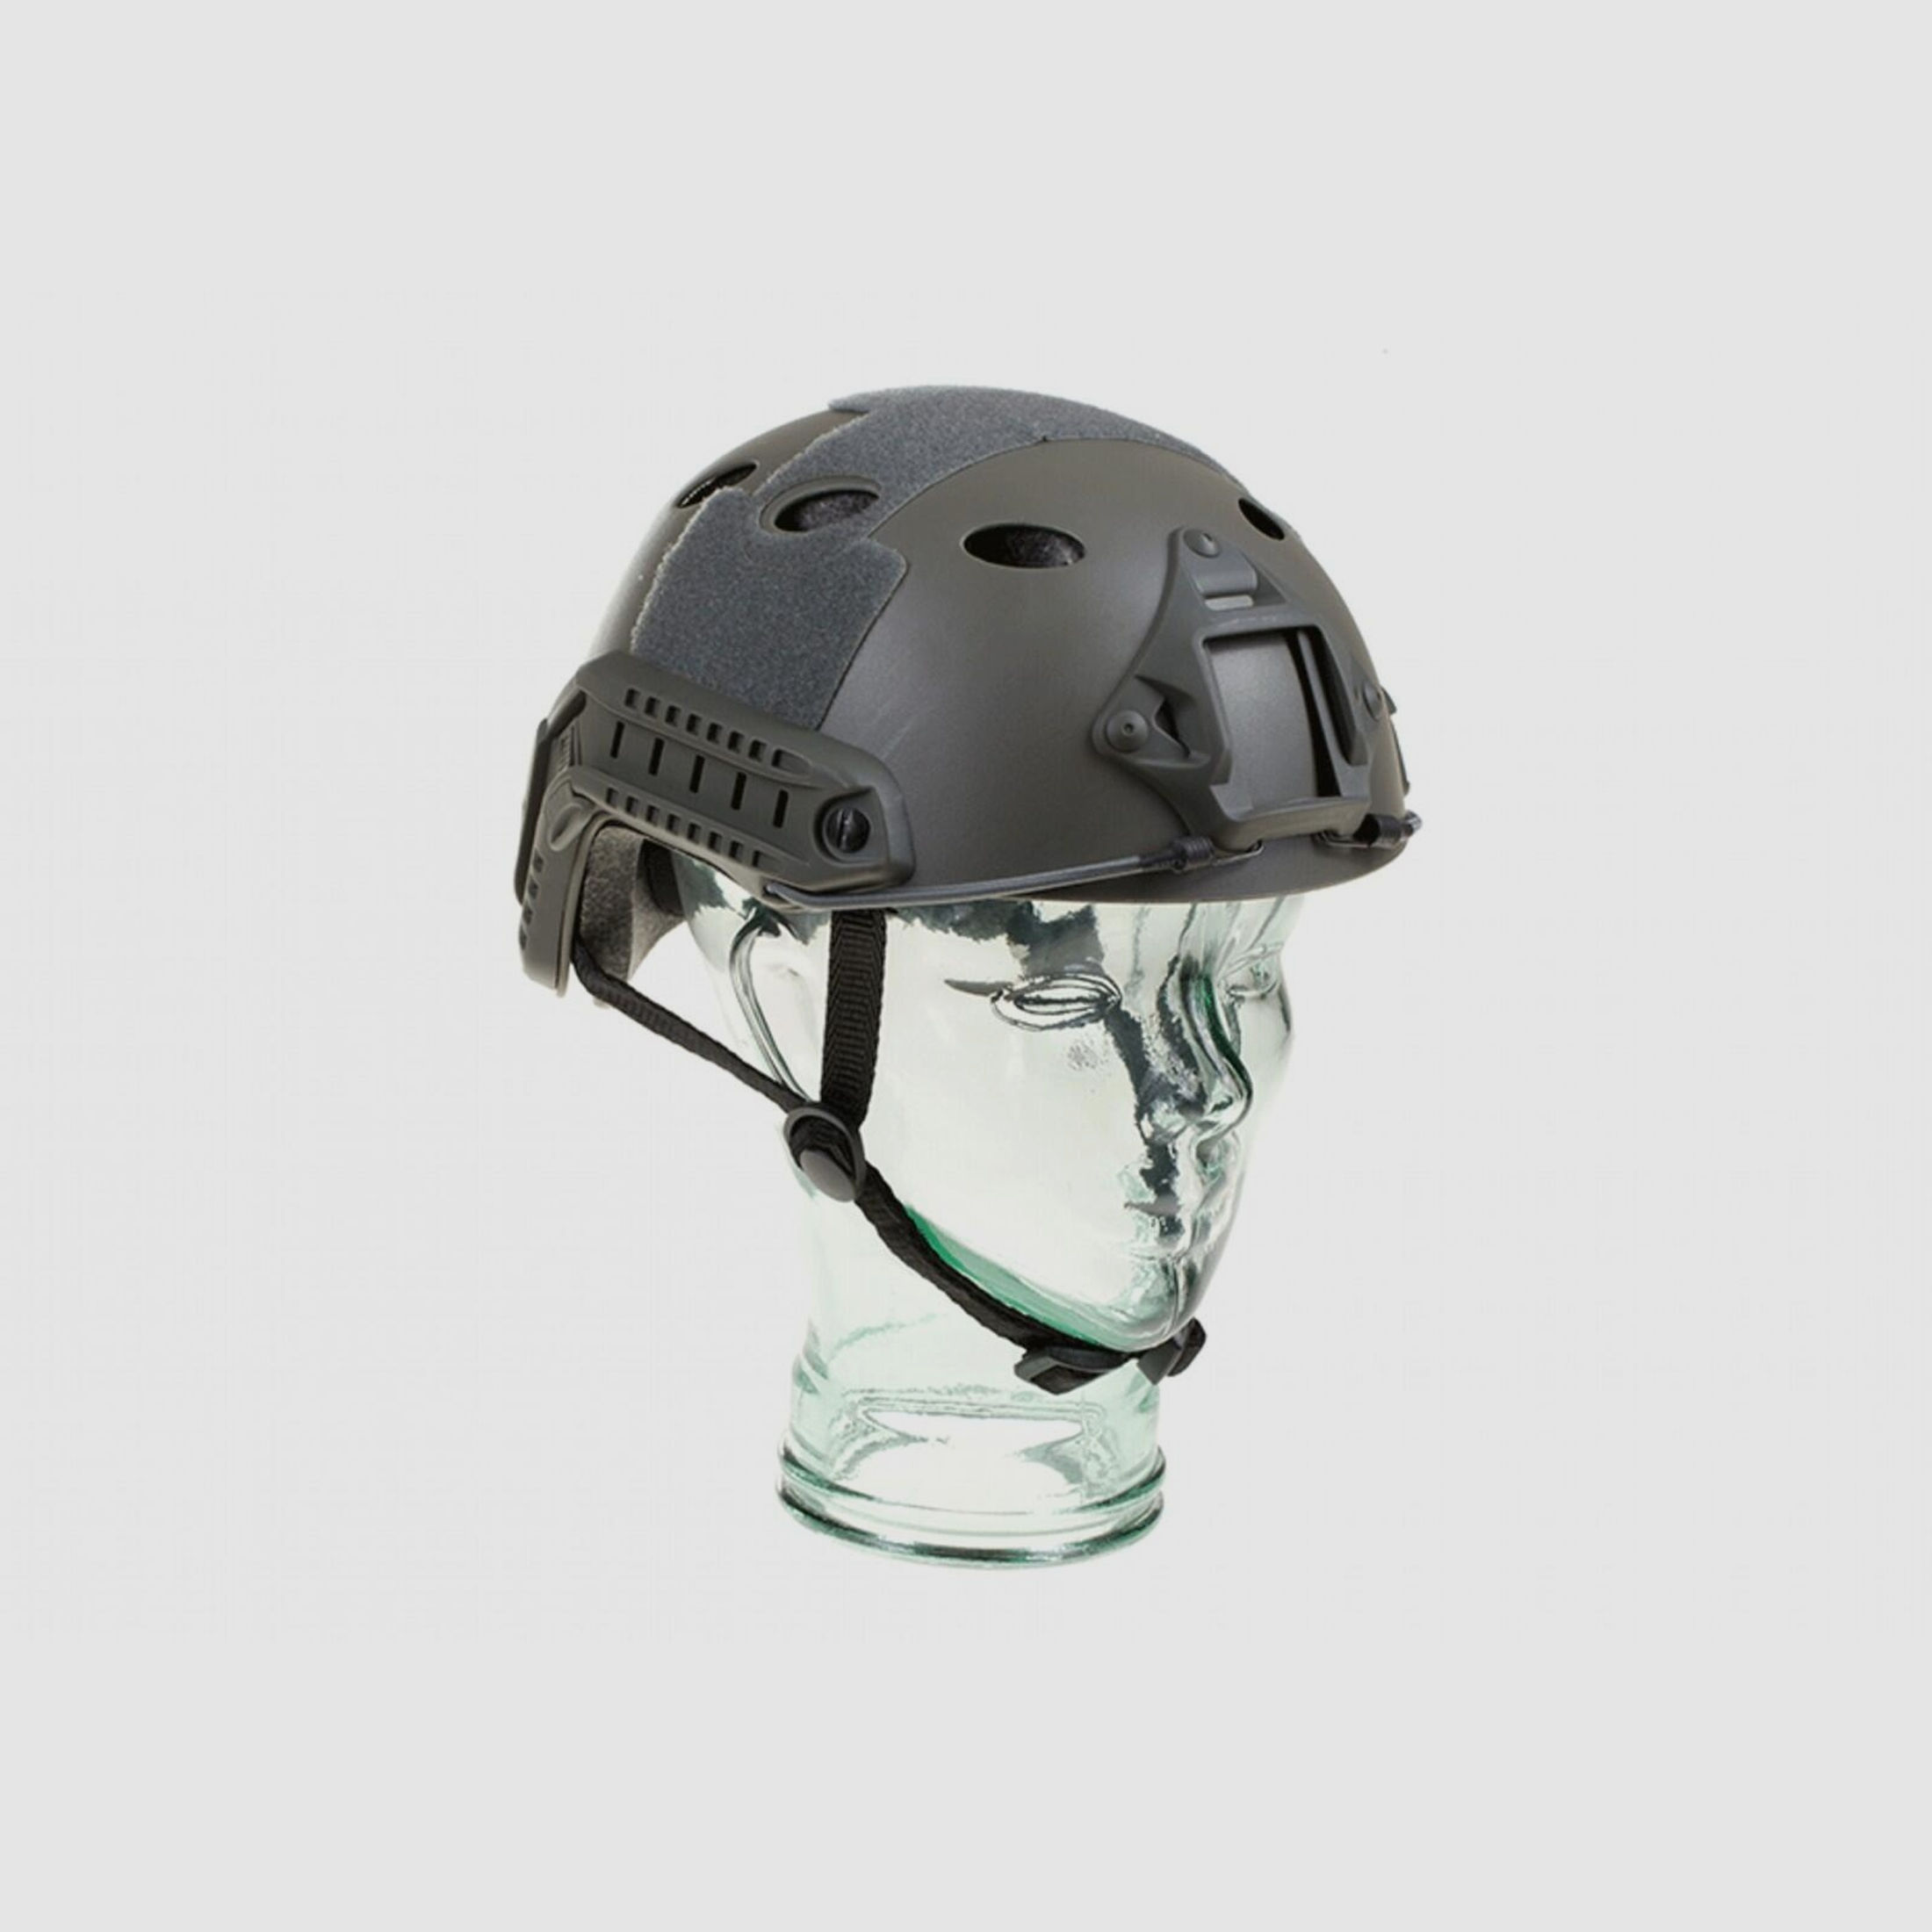 Emerson FAST Helmet PJ Eco Version-Foliage Green